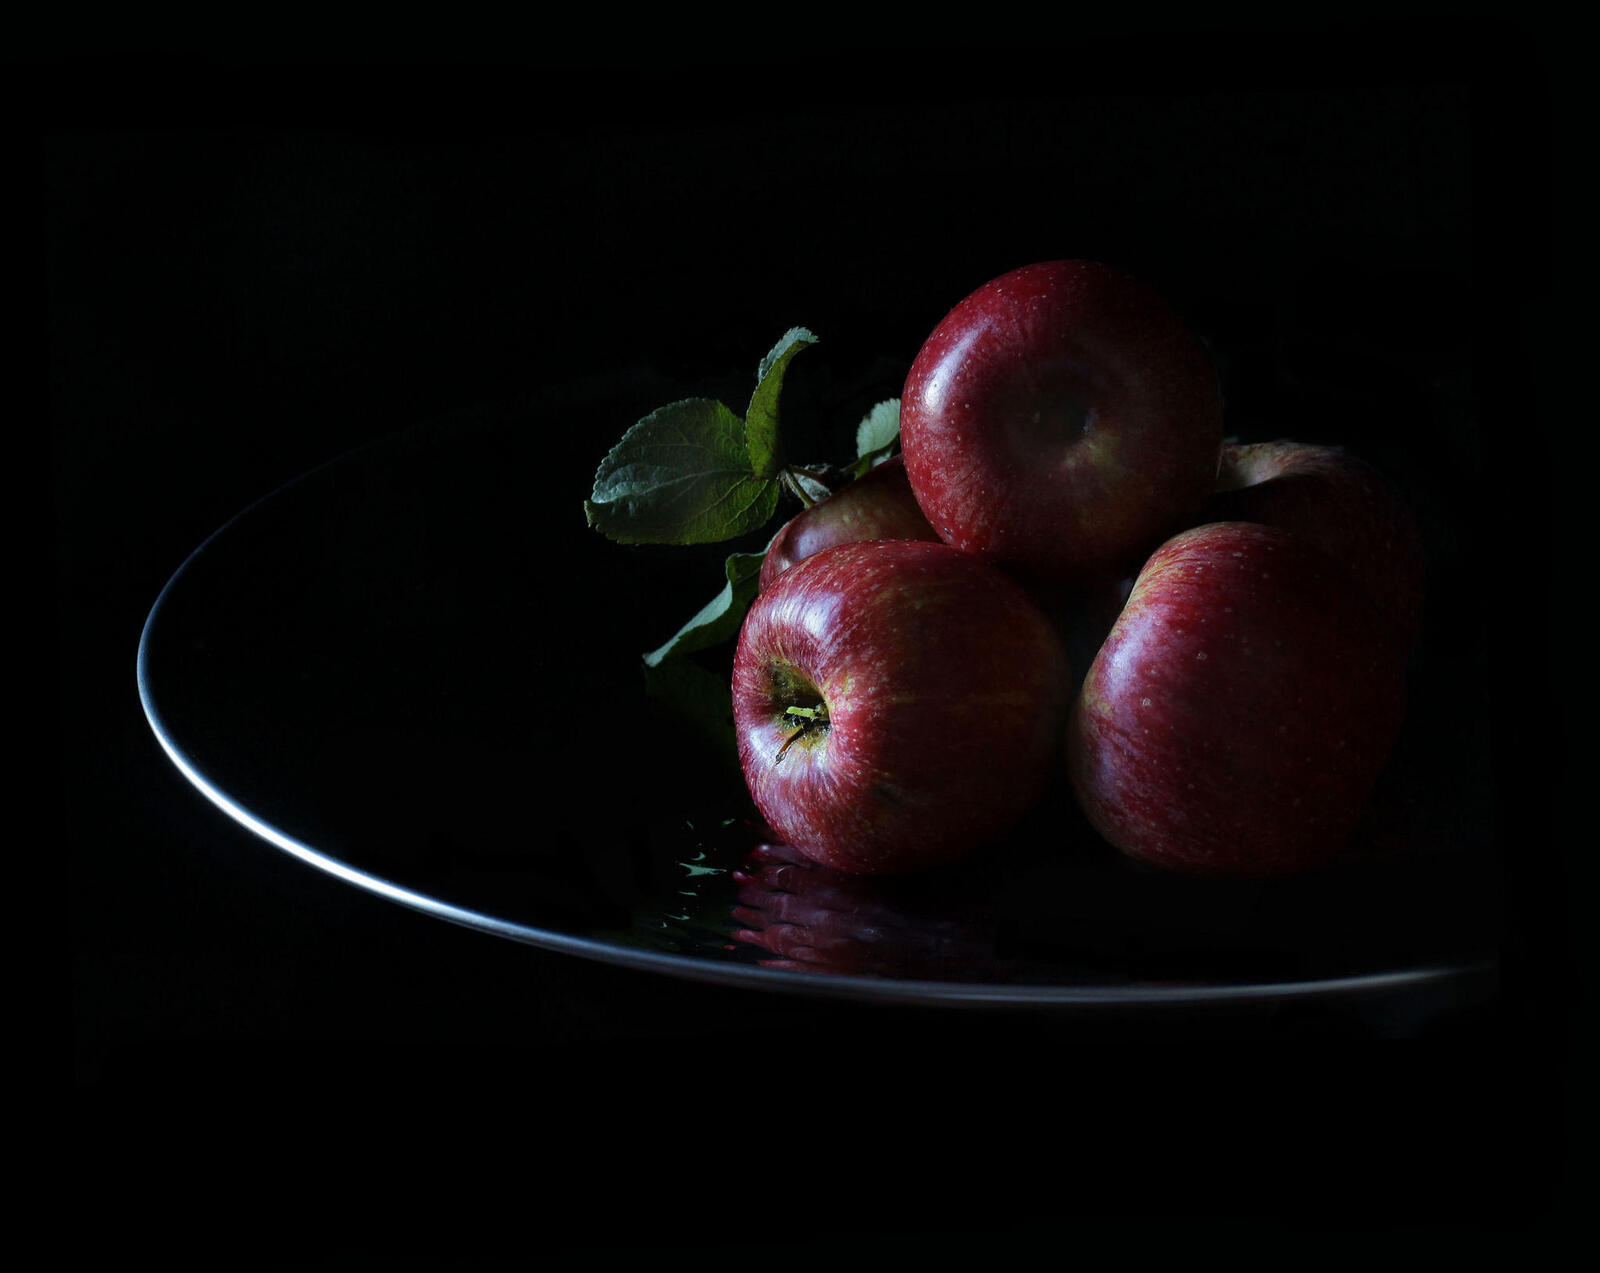 Wallpapers dish apples fruit on the desktop